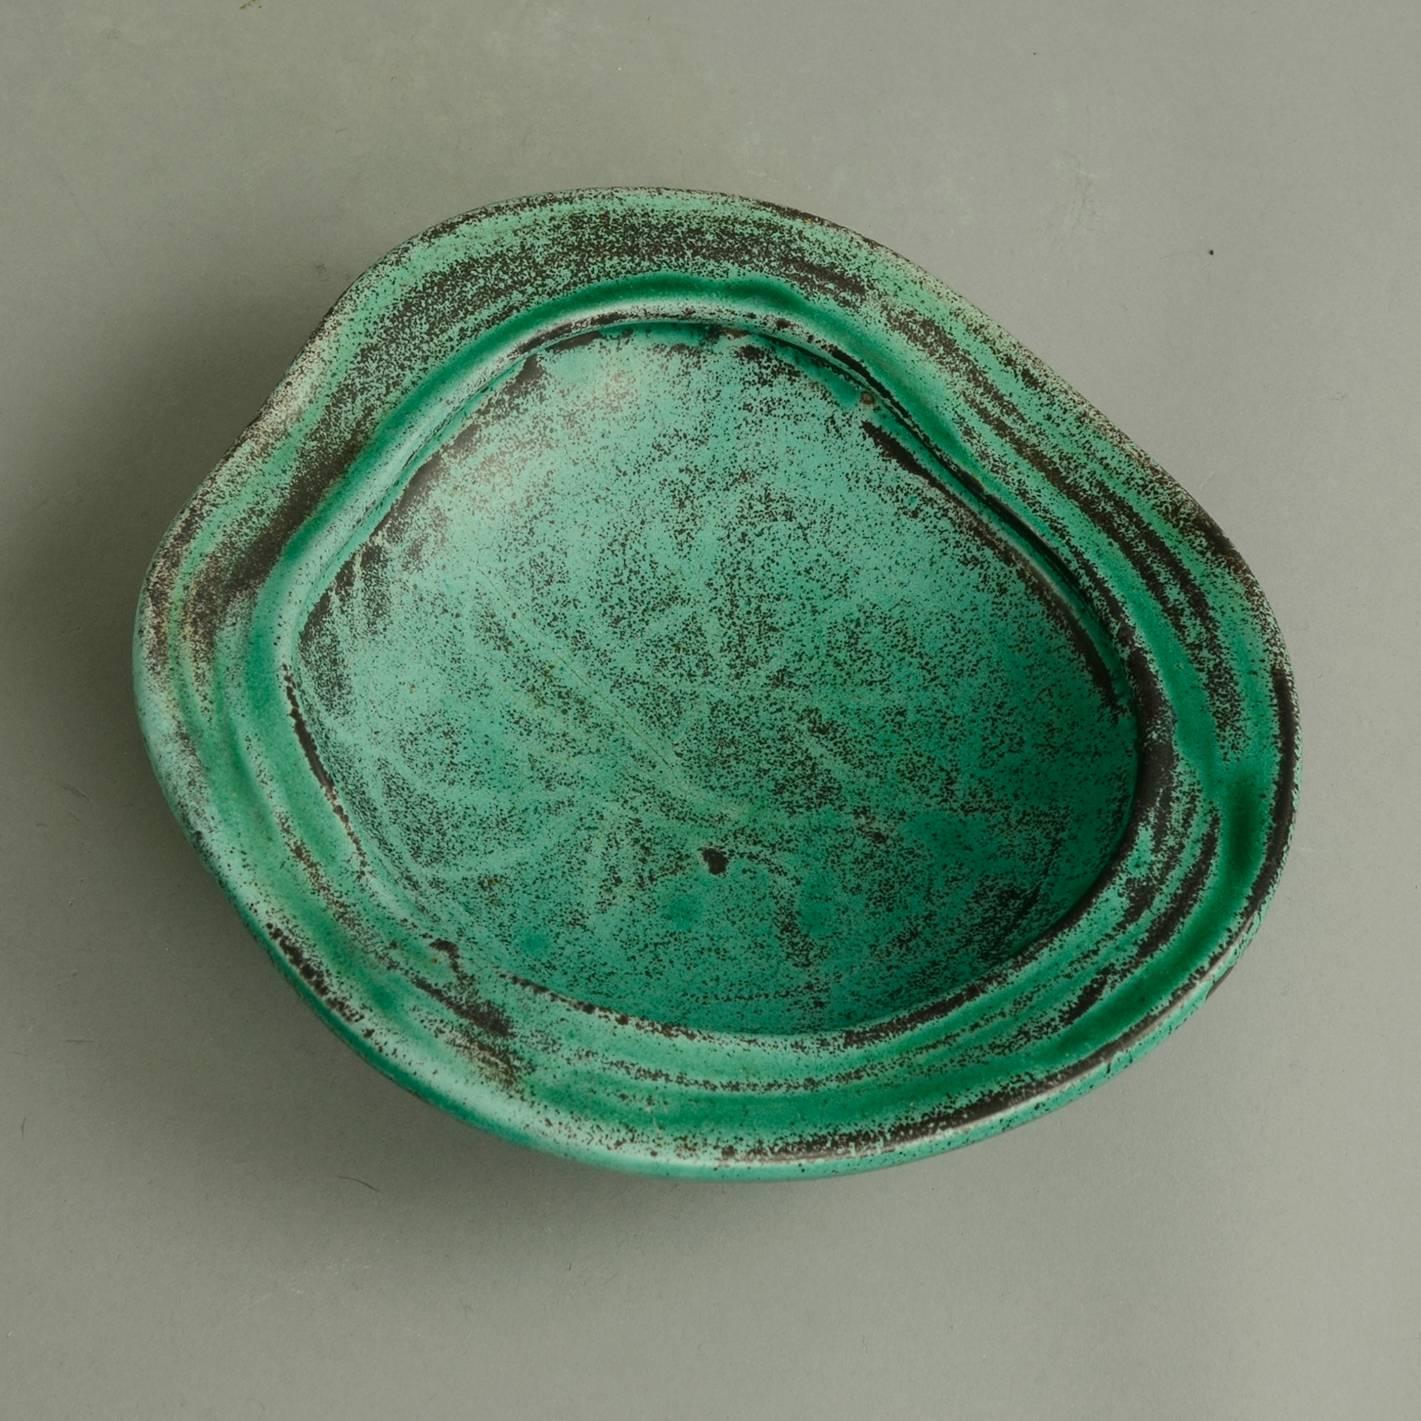 Svend Hammershoj for Herman A. Kahler Keramik

Stoneware bowl with matte green and black glaze, circa 1930s
Measures: Height: 2 1/4" (5.5cm), width 8" (20cm) 
Incised "HAK Danmark" No. B3547

Stoneware vase with matte green